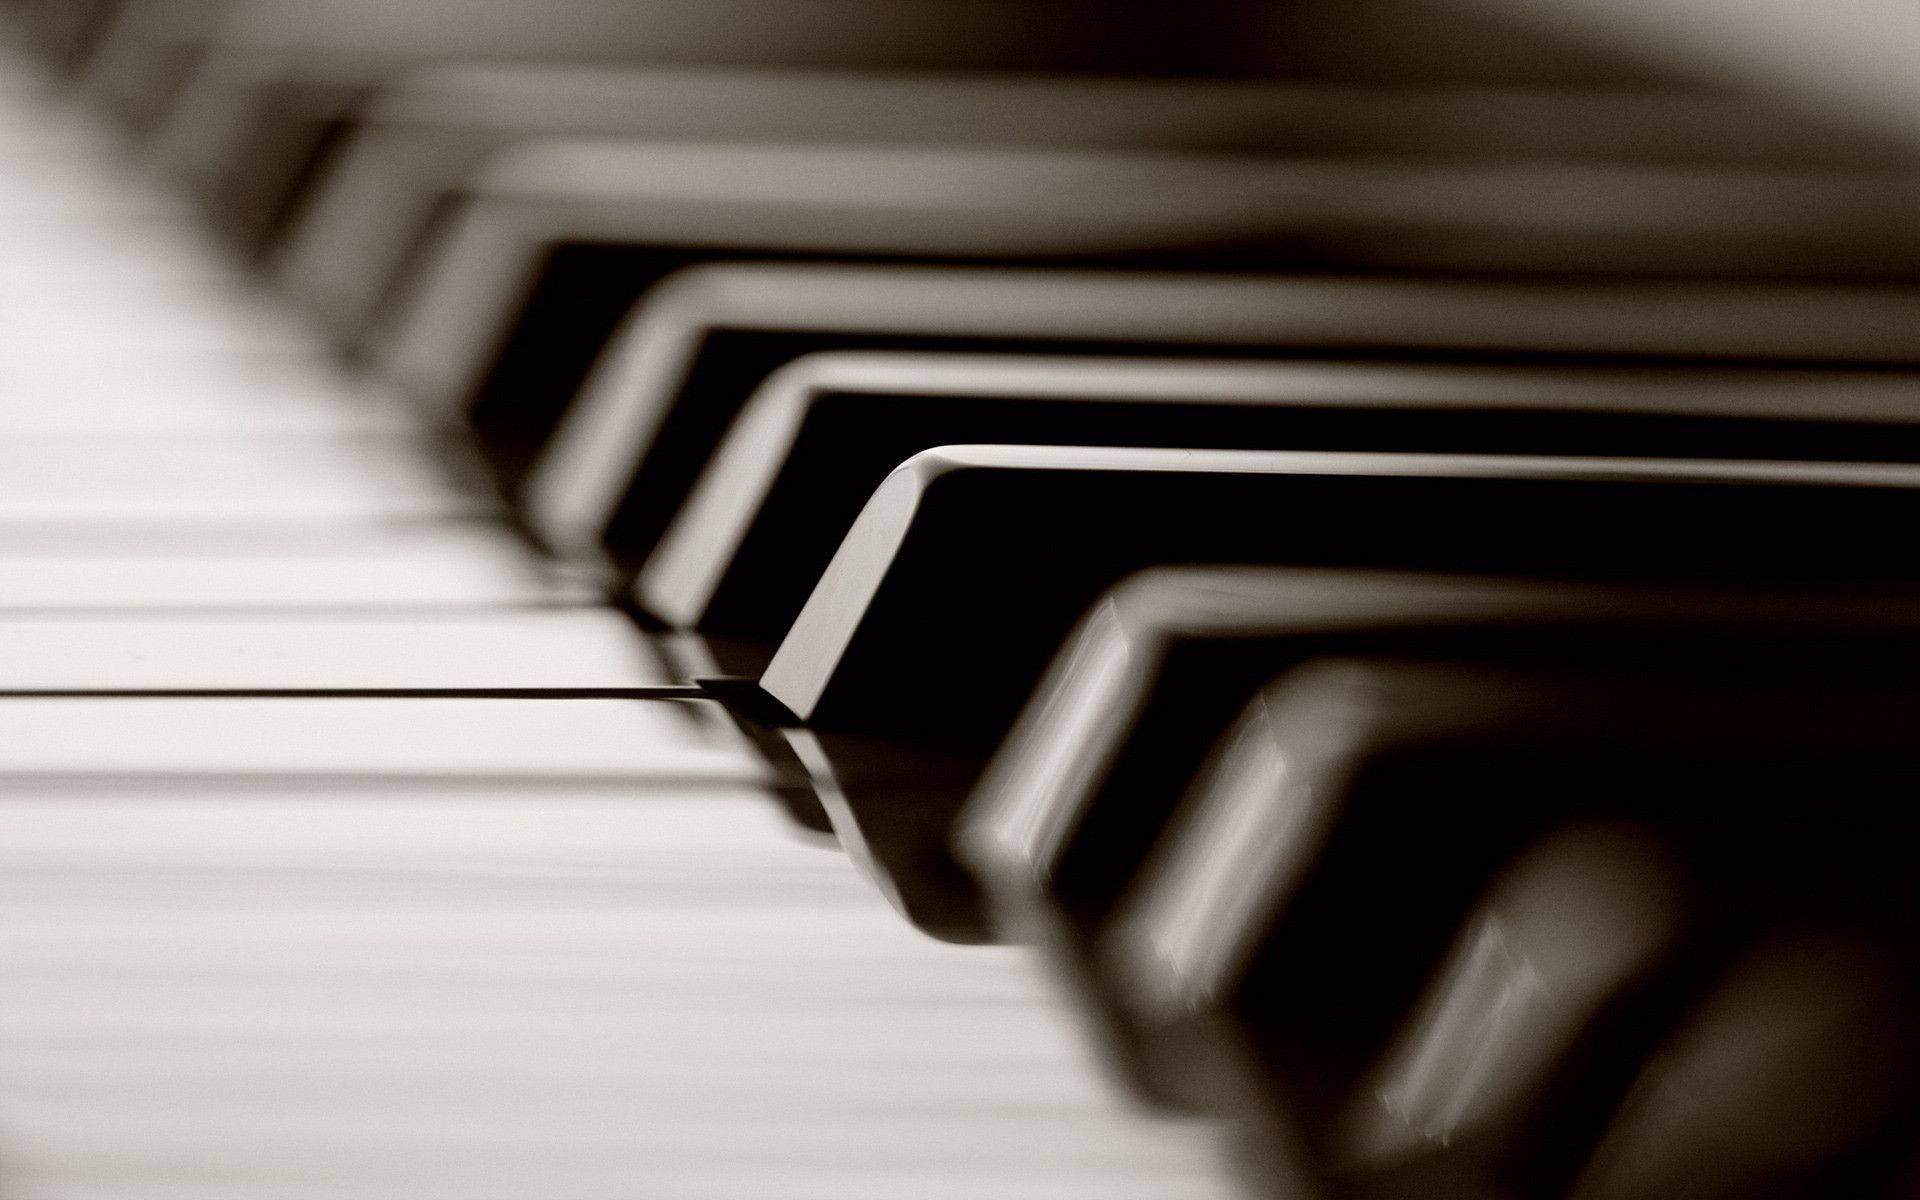 Piano Black Keys Close-up Monochrome Background